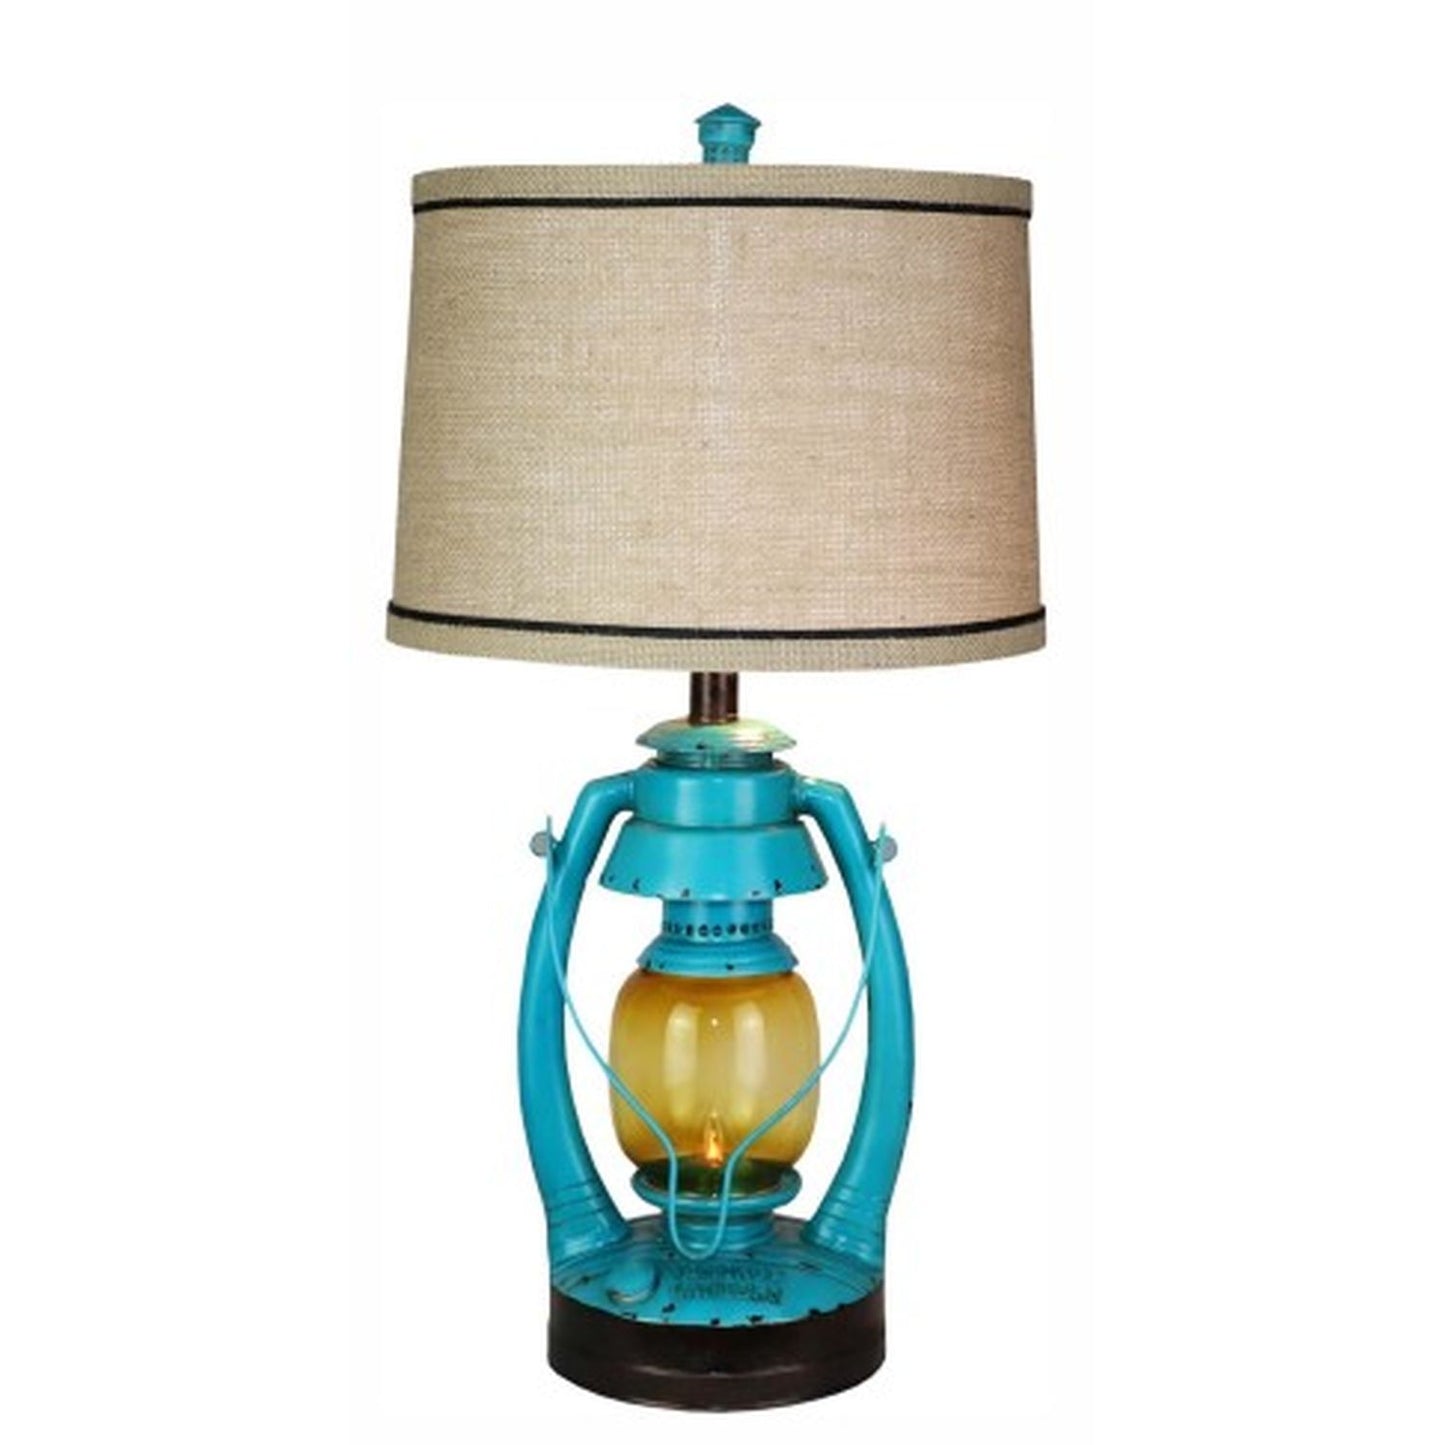 Vintage Direct 26"H Vintage Lantern Table Lamp Turquoise